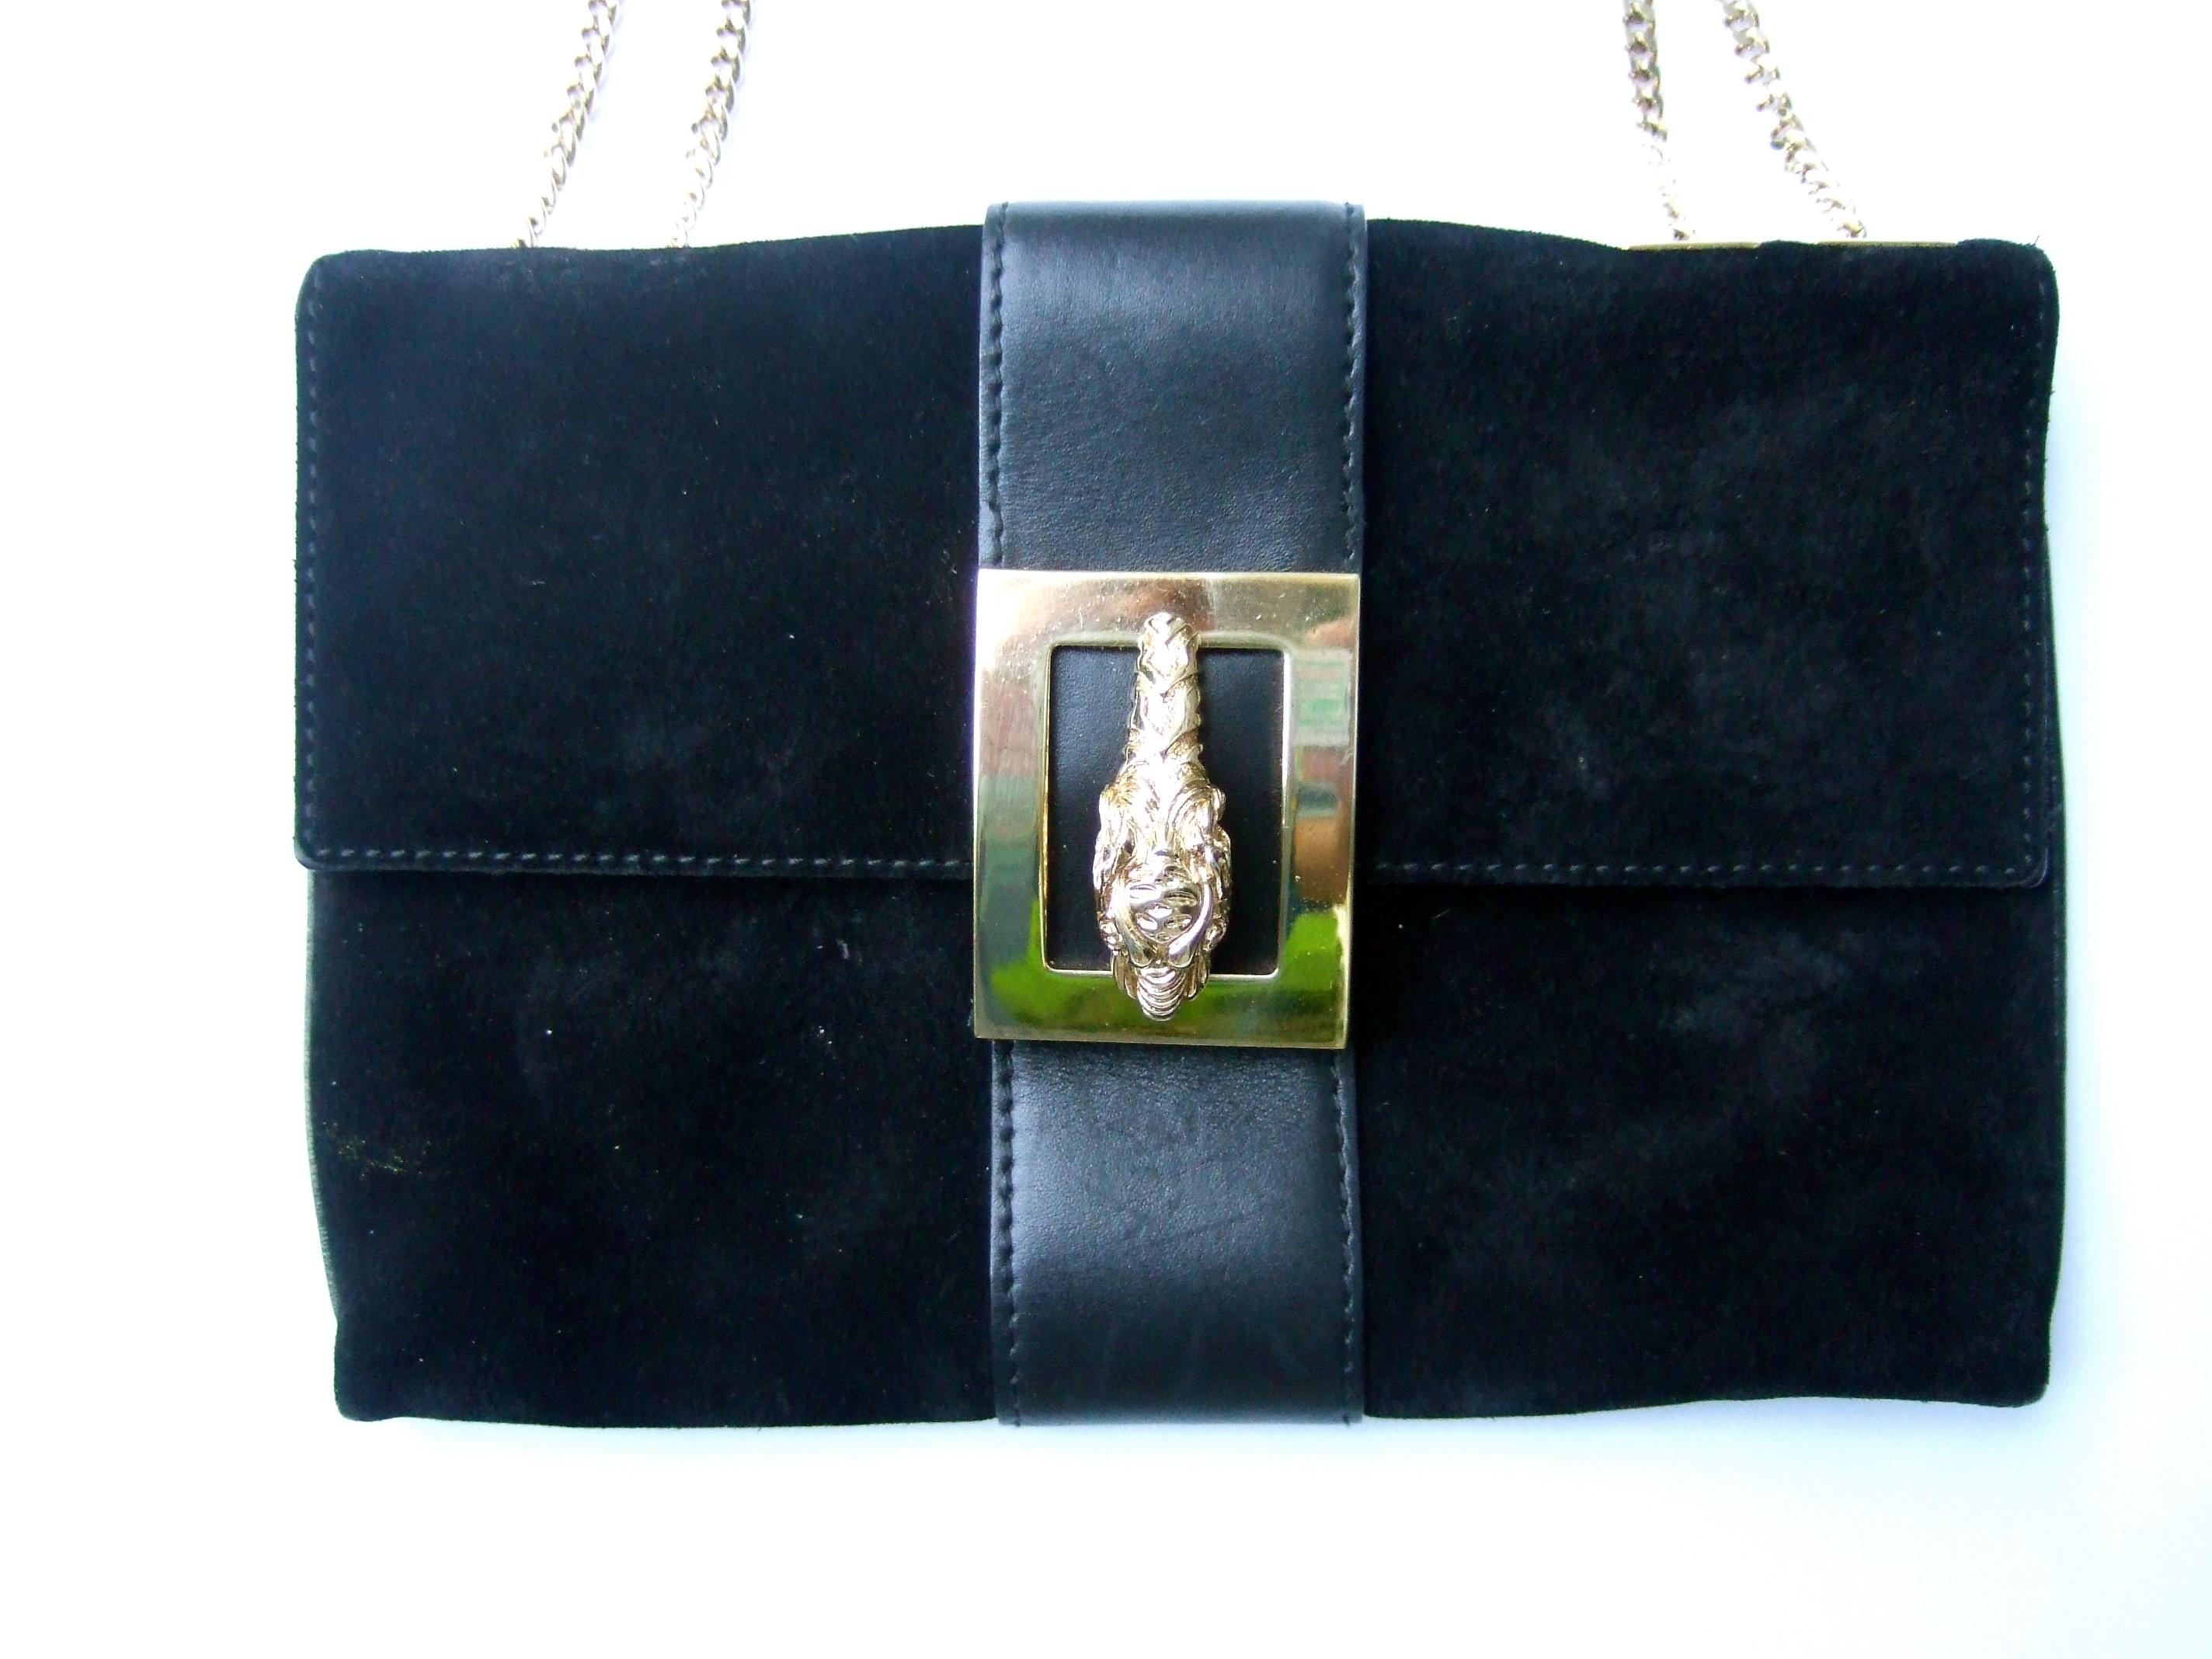 Gucci Italy Rare Black Suede Tiger Emblem Handbag Tom Ford Design c 1990s  For Sale 1